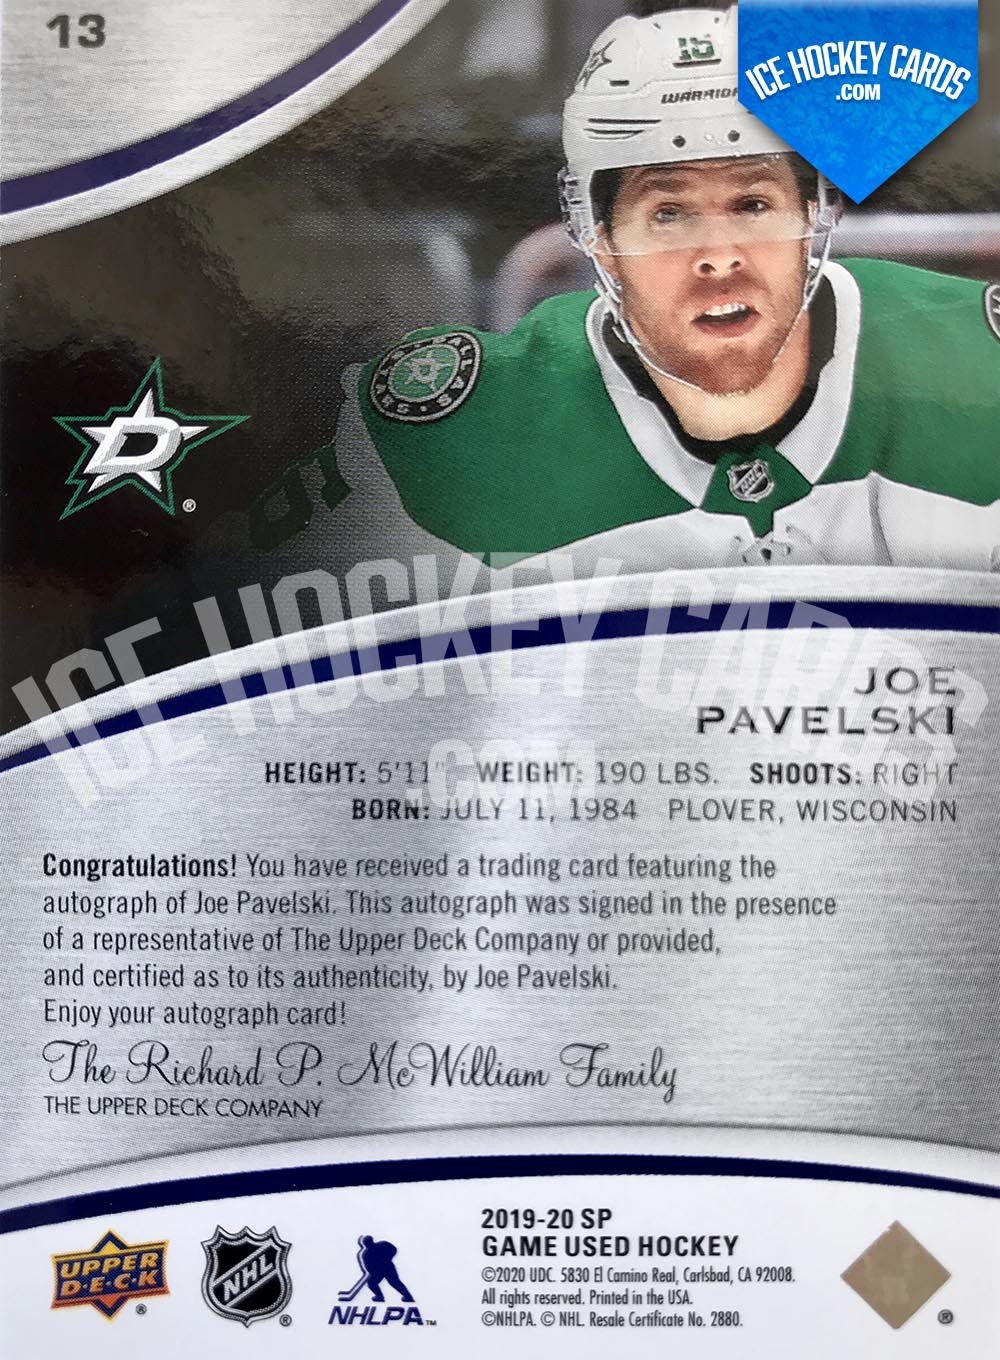 Upper Deck - Stature 2019-20 - Joe Pavelski Autograph Card back